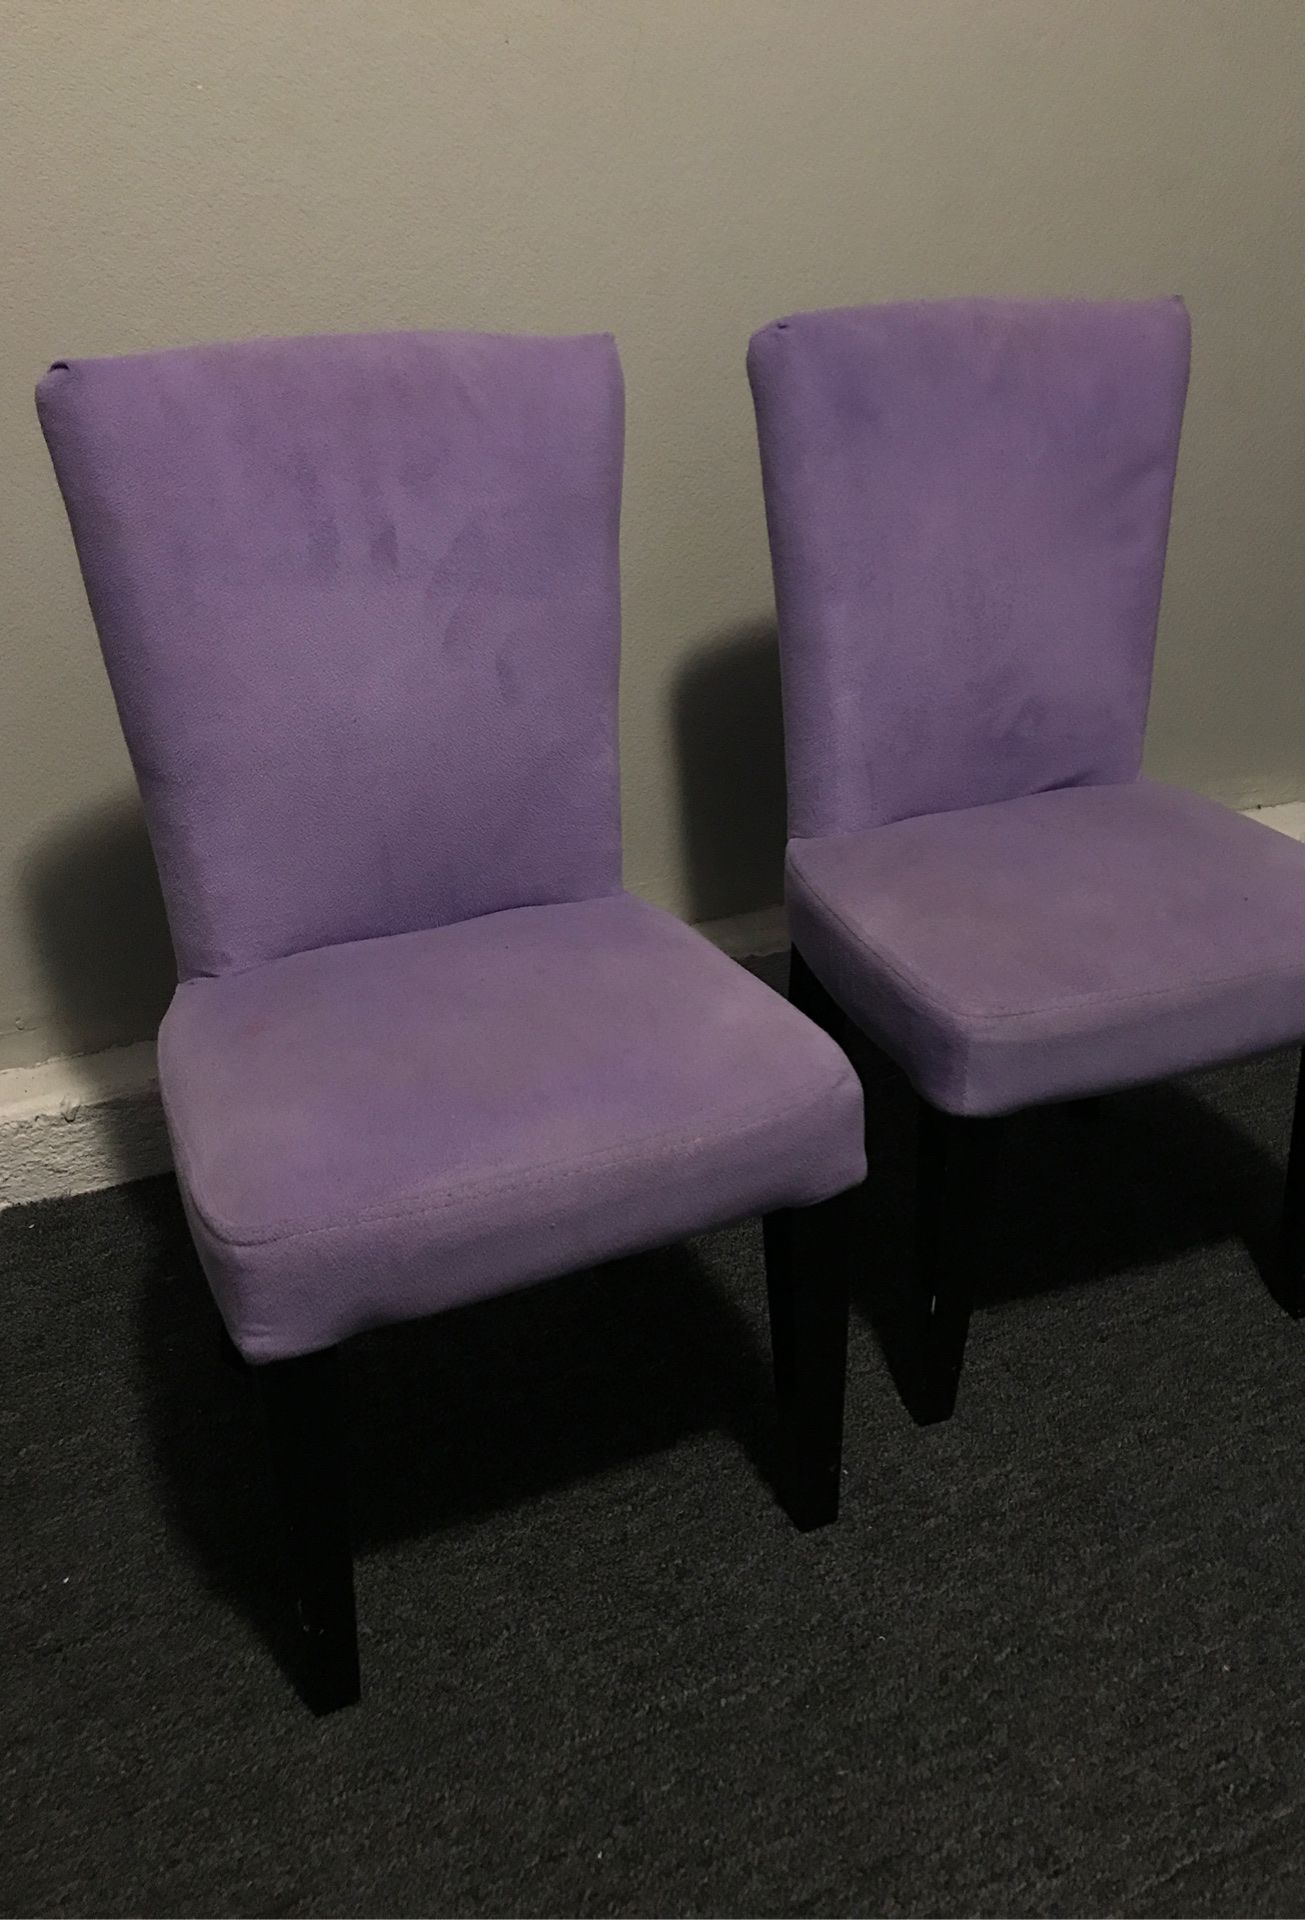 Kids chairs Purple & black